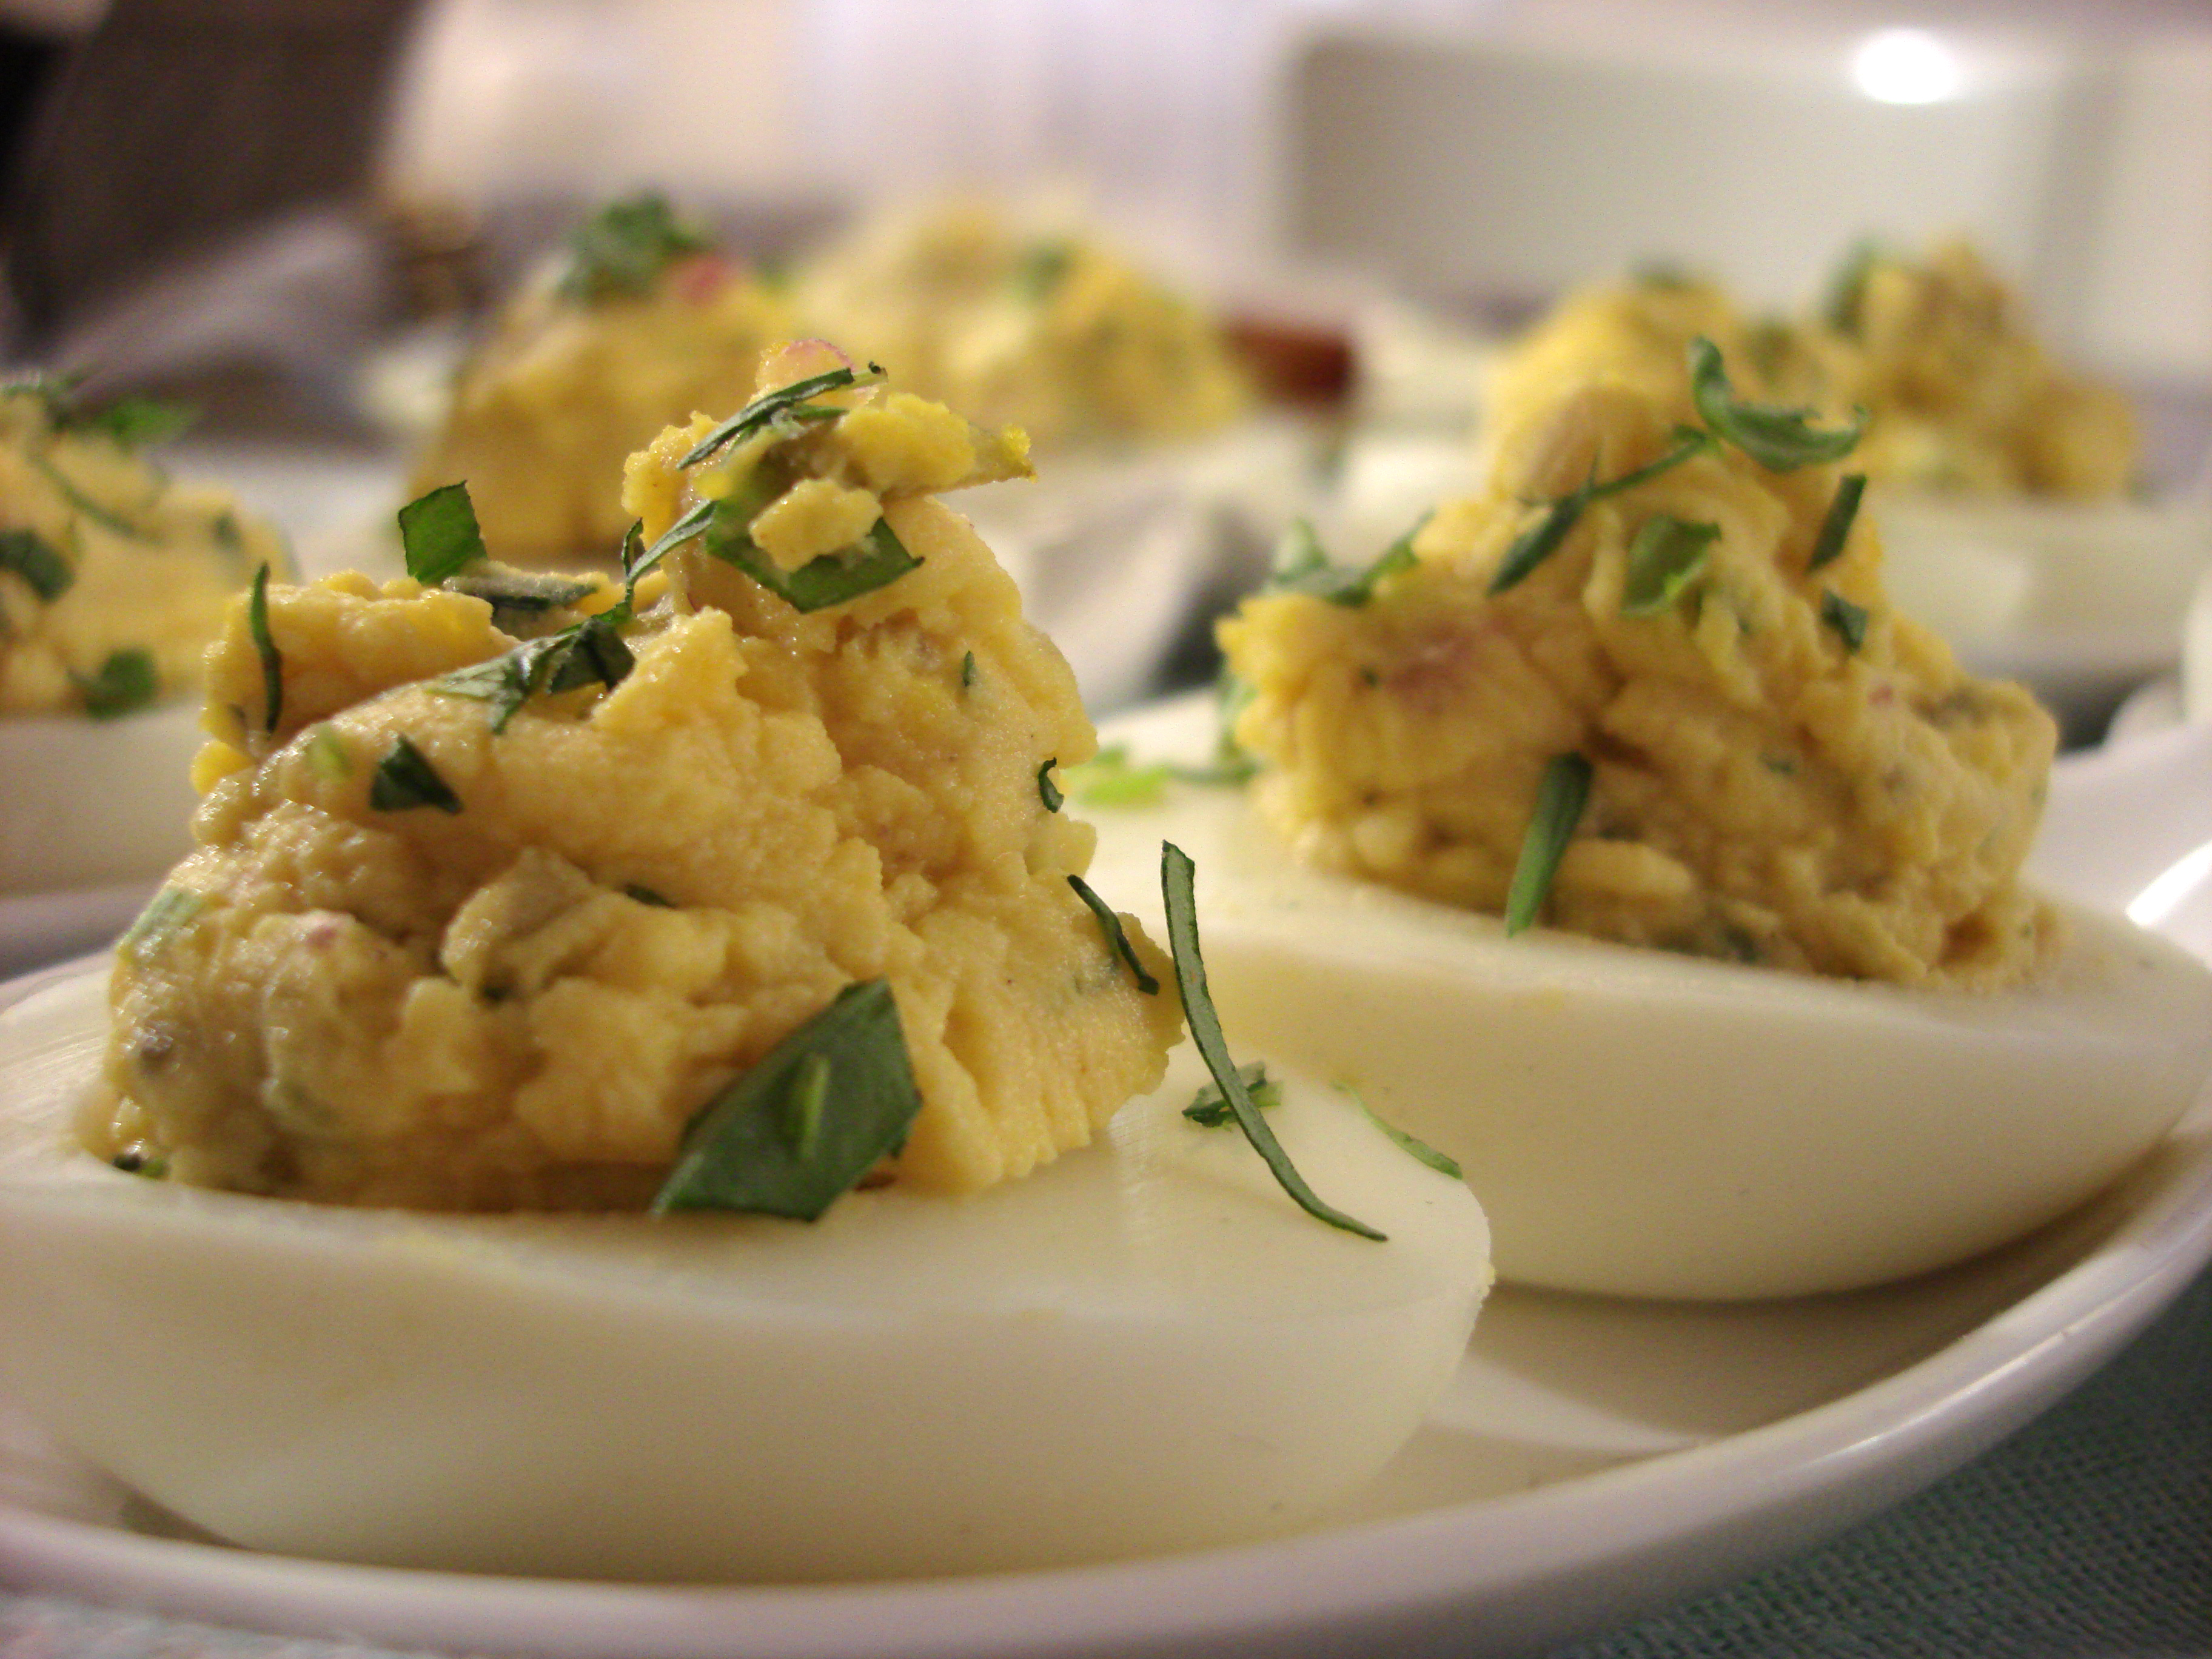 https://www.foodnetwork.com/content/dam/images/food/fullset/2012/2/24/1/VF411_tarragon-deviled-eggs_s4x3.jpg